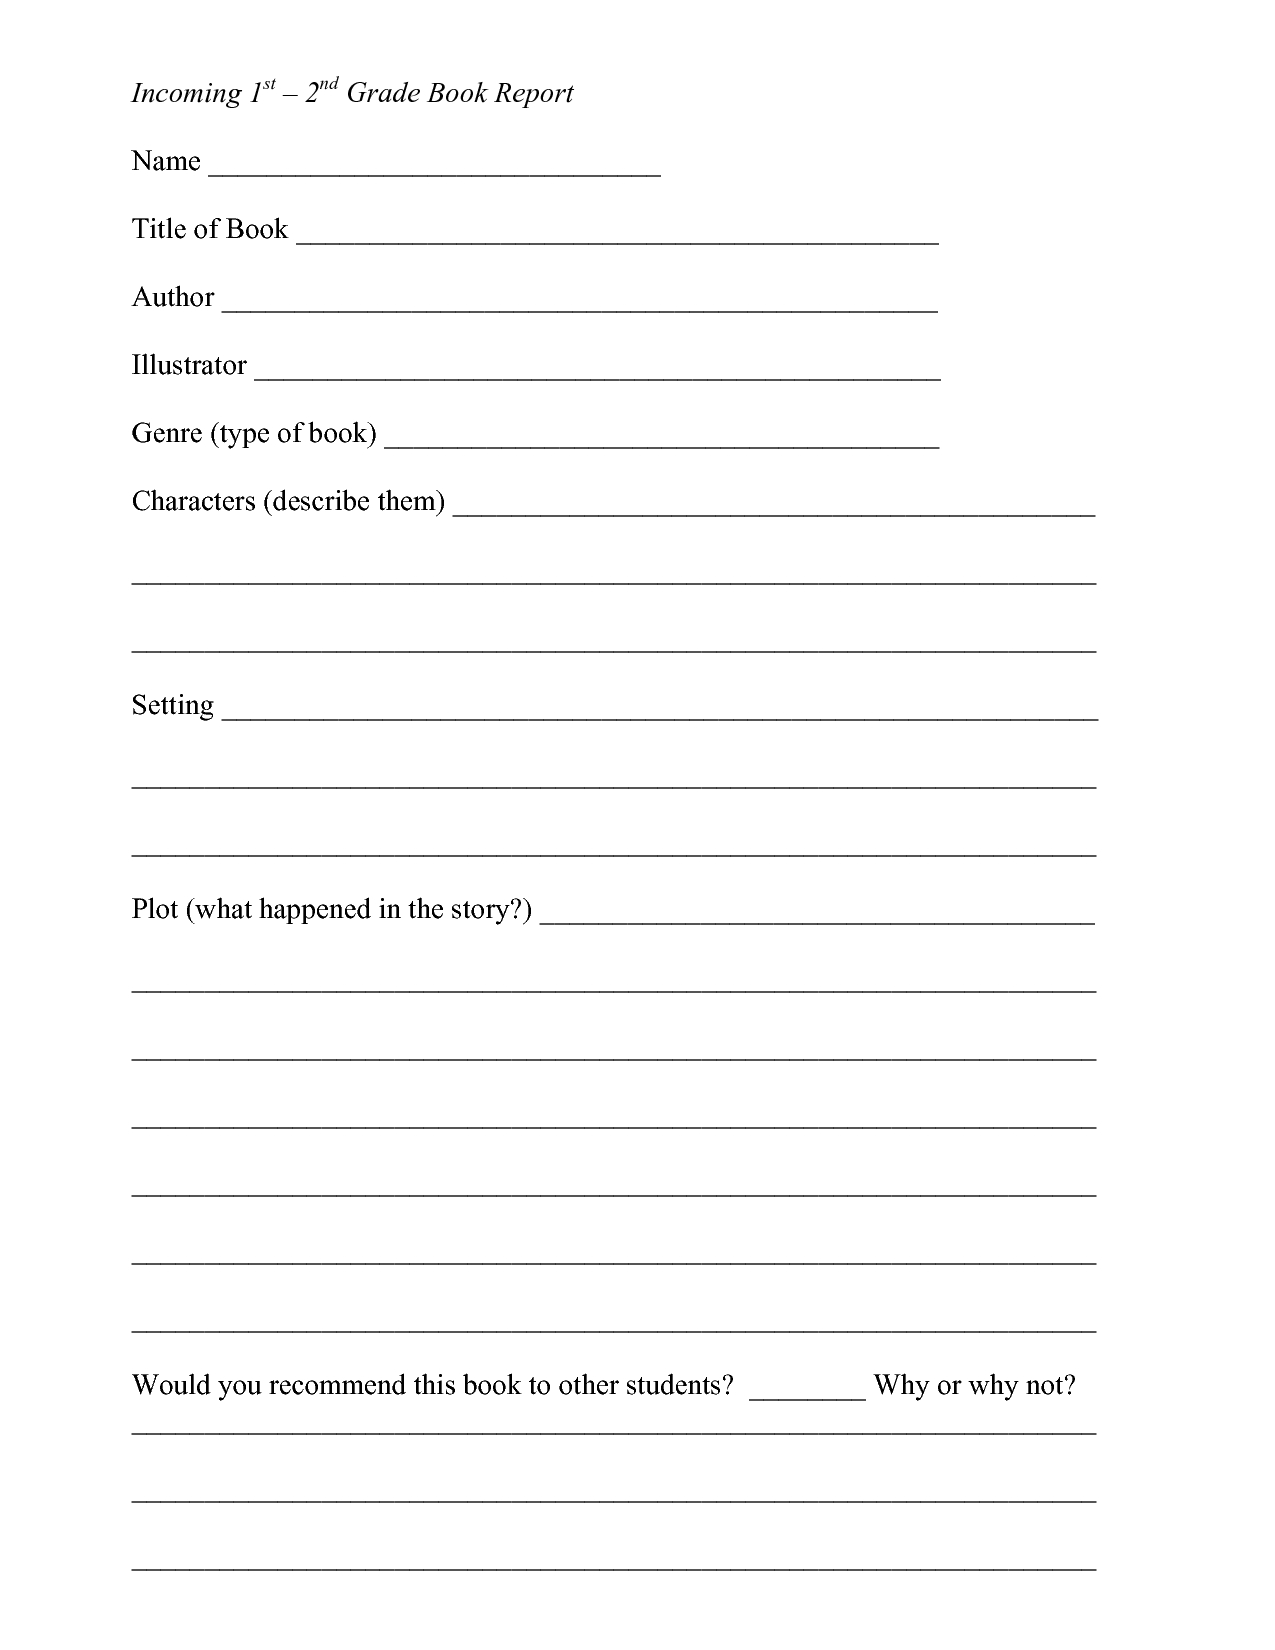 Book Report Template 2Nd Grade Free – Book Report Form Regarding Book Report Template 2Nd Grade